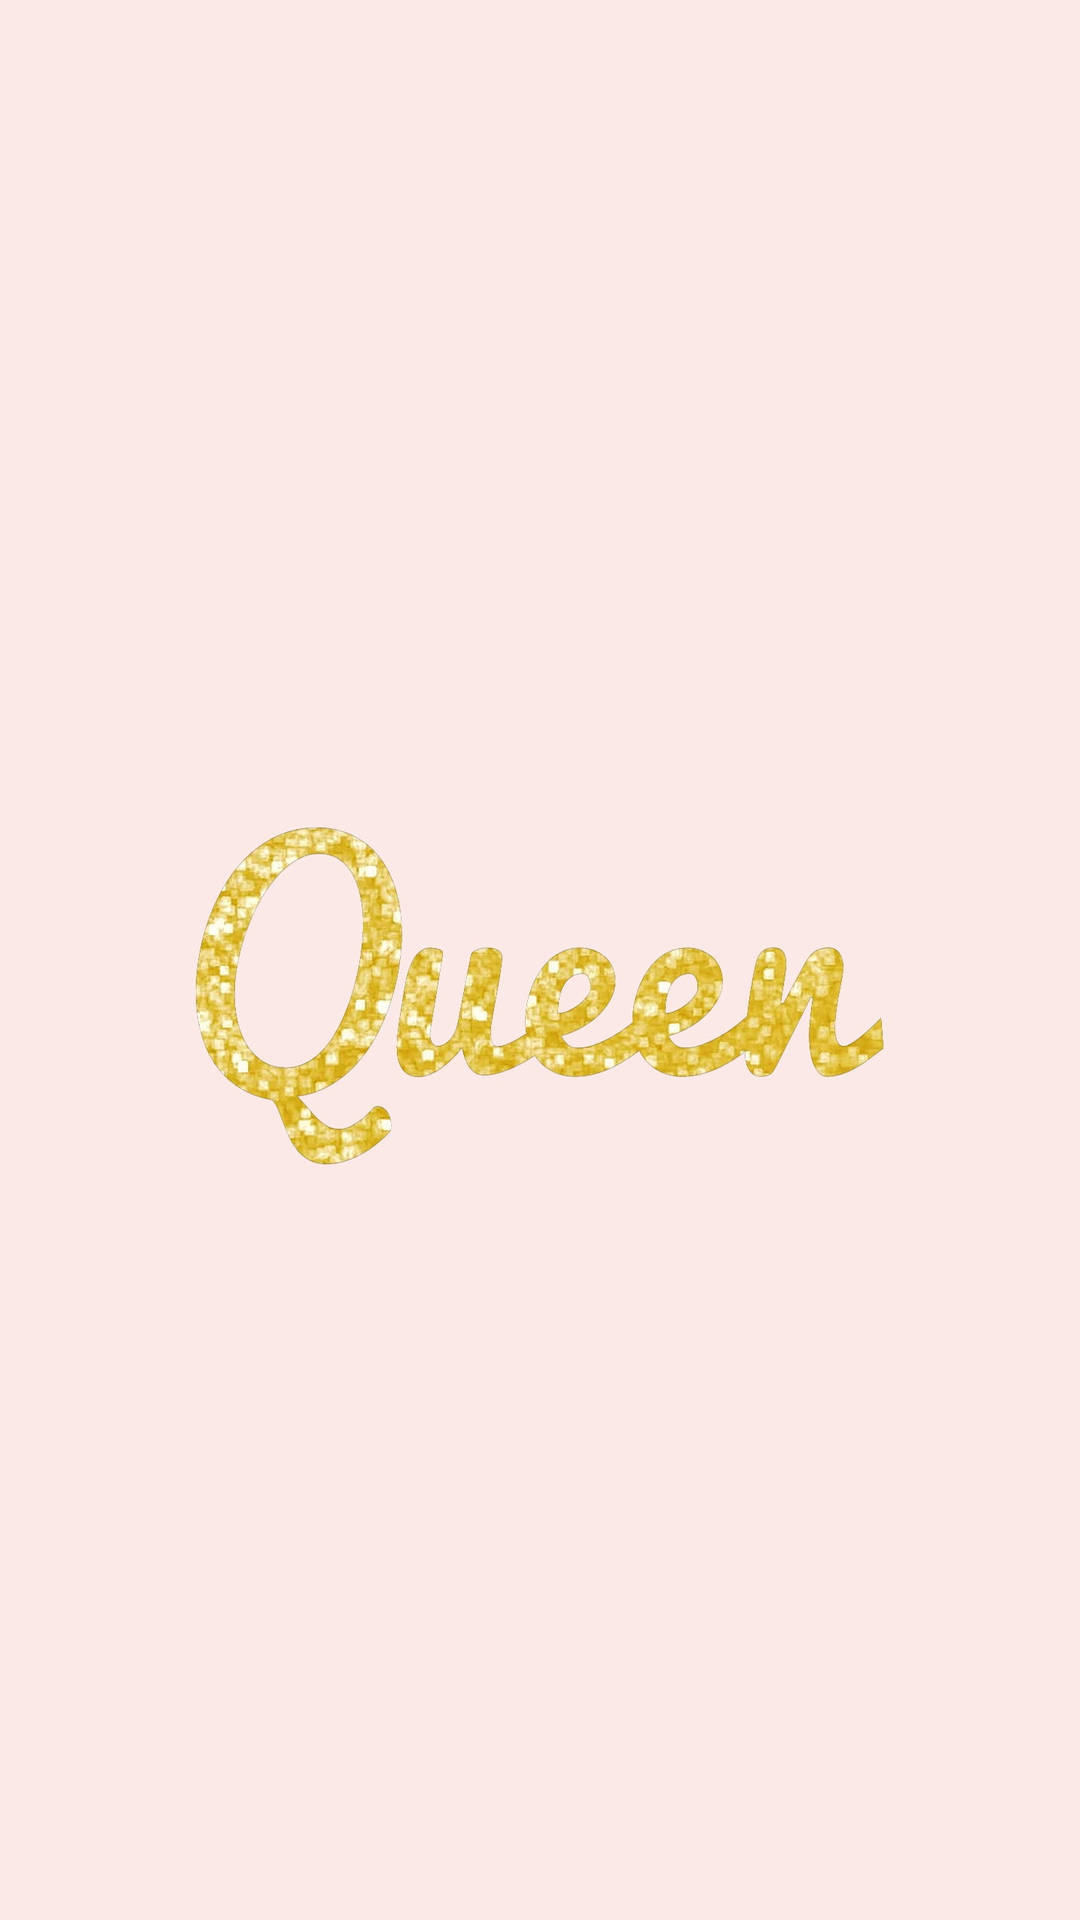 Gold Glitter Queen Girly Background